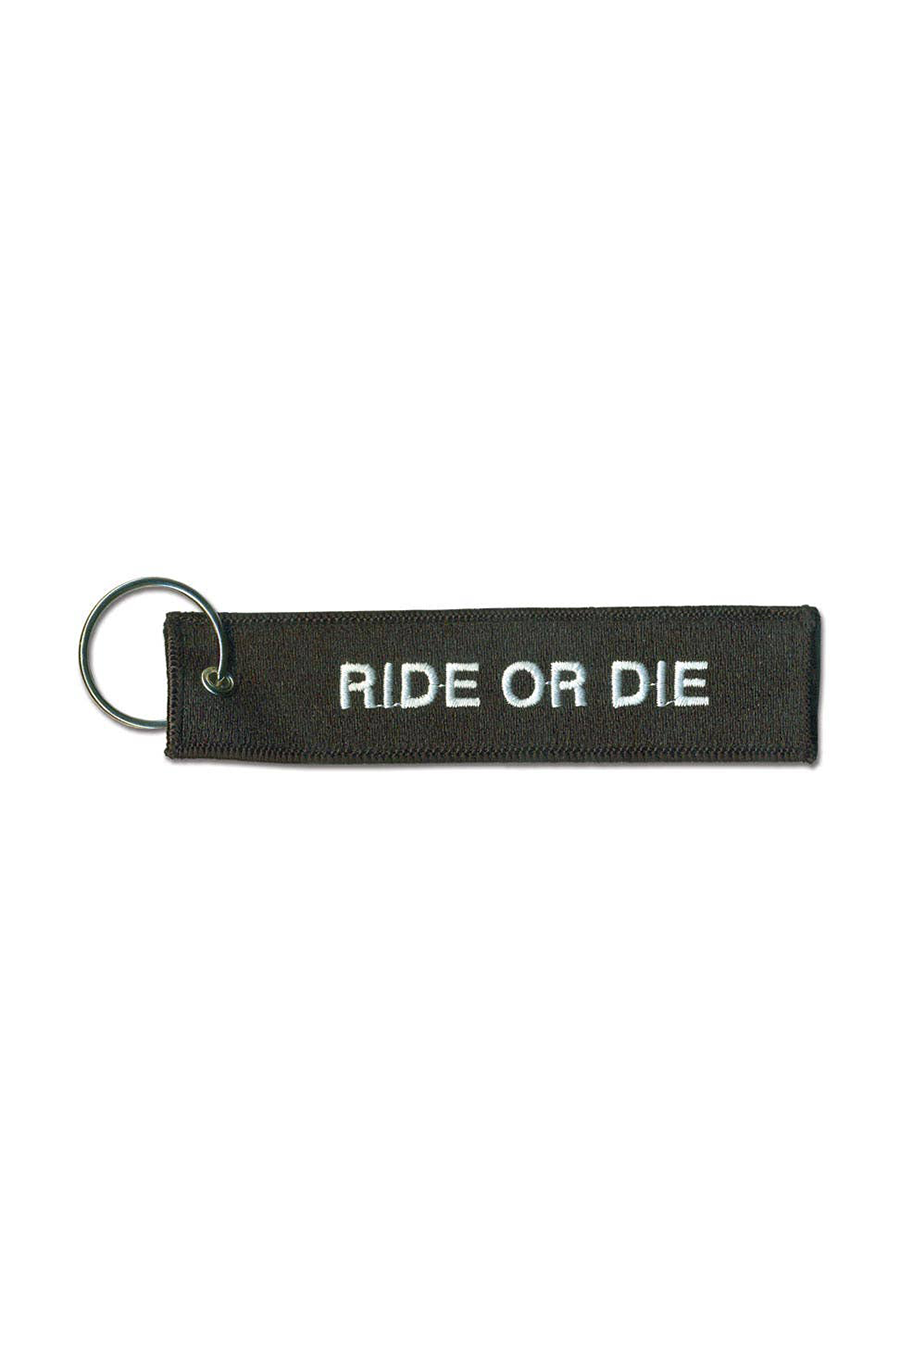 Ride or Die Keychain - Main Image Number 1 of 1